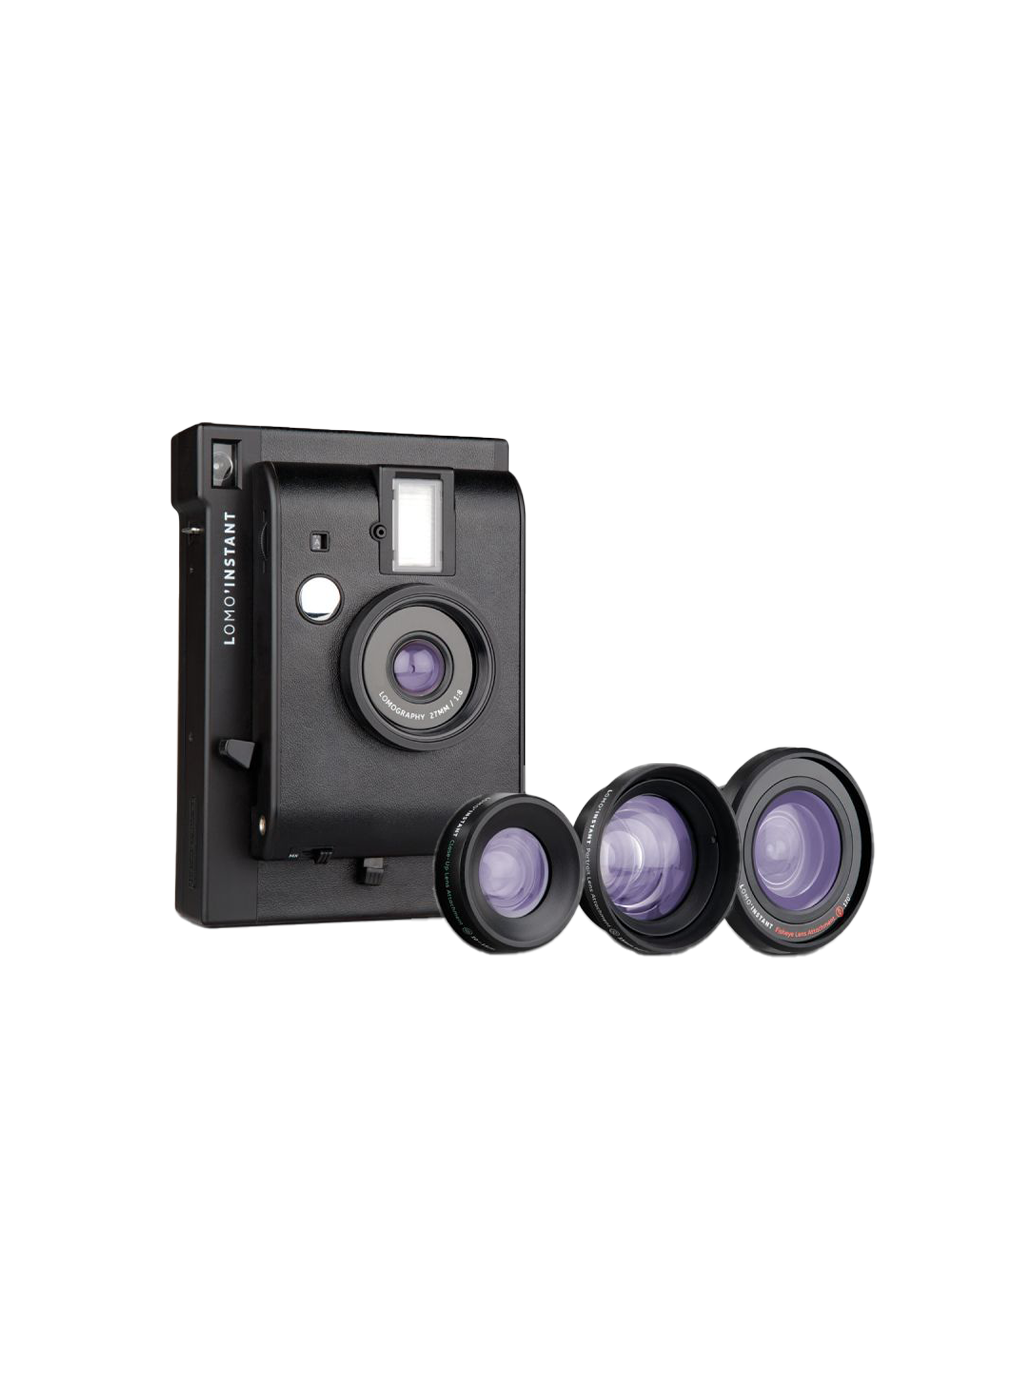 Instant camera with Lomo'Instant Camera lenses